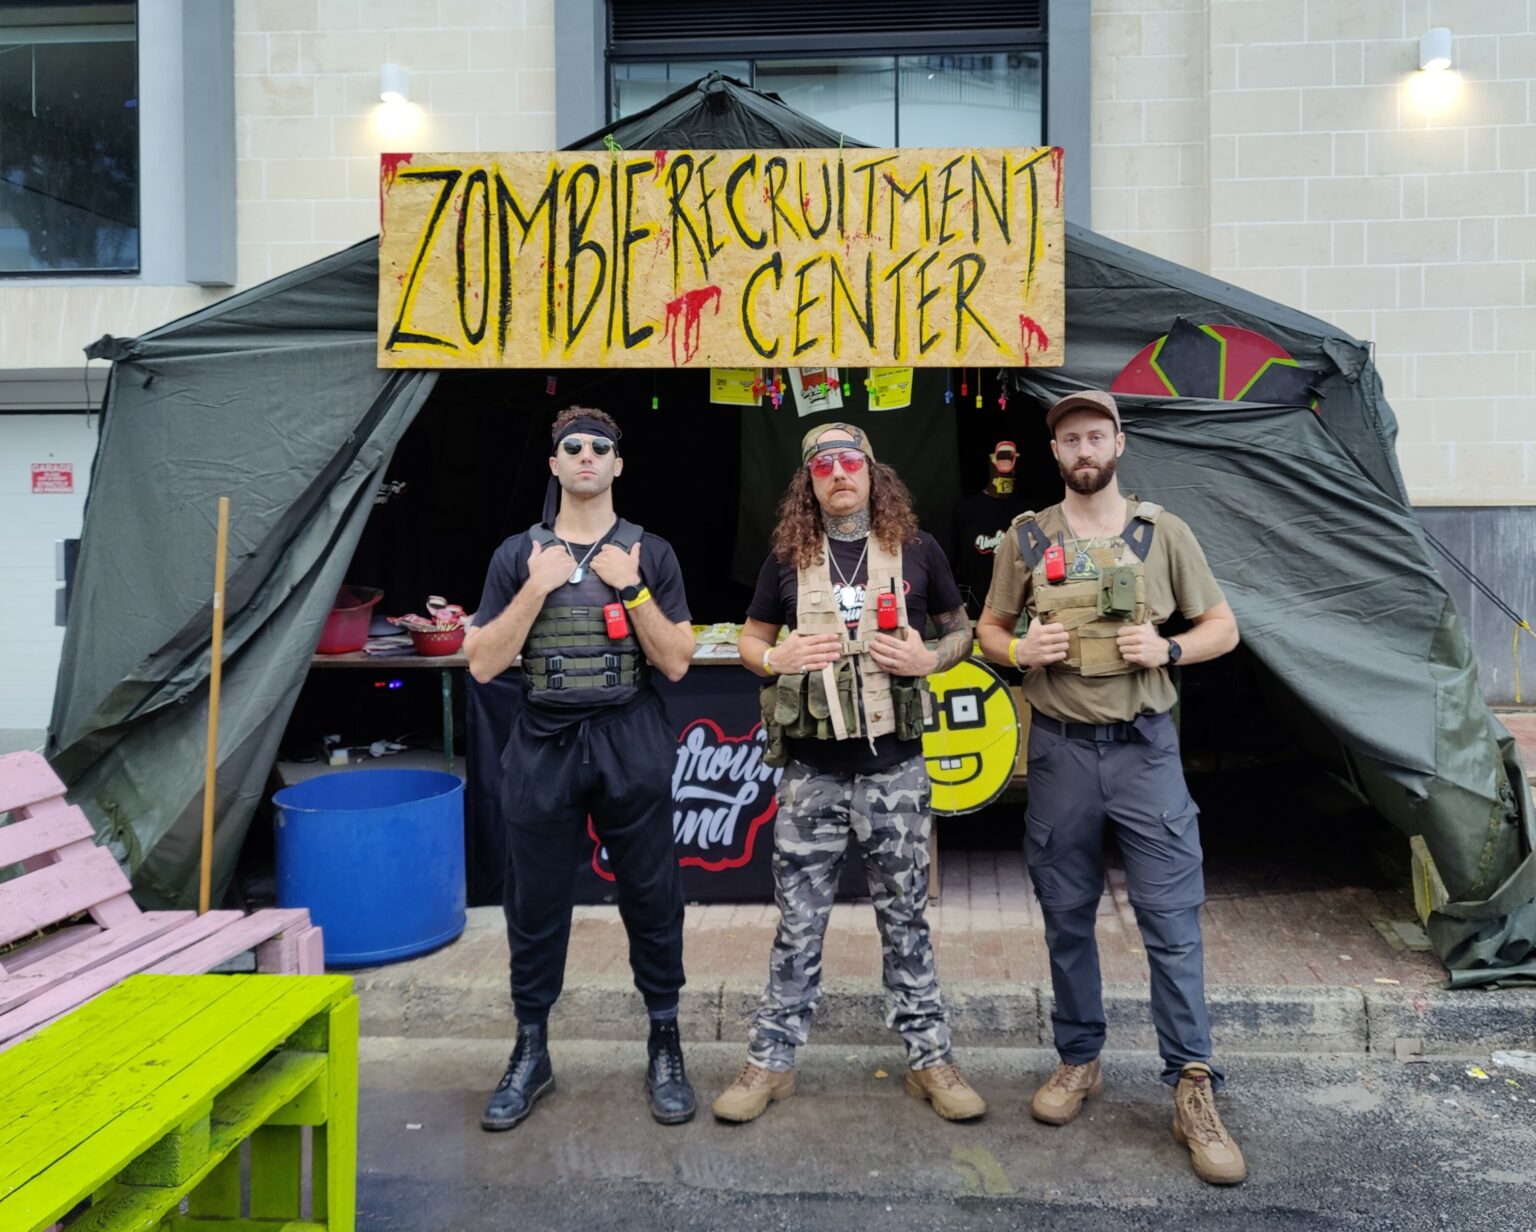 Zombie Recruitment Center